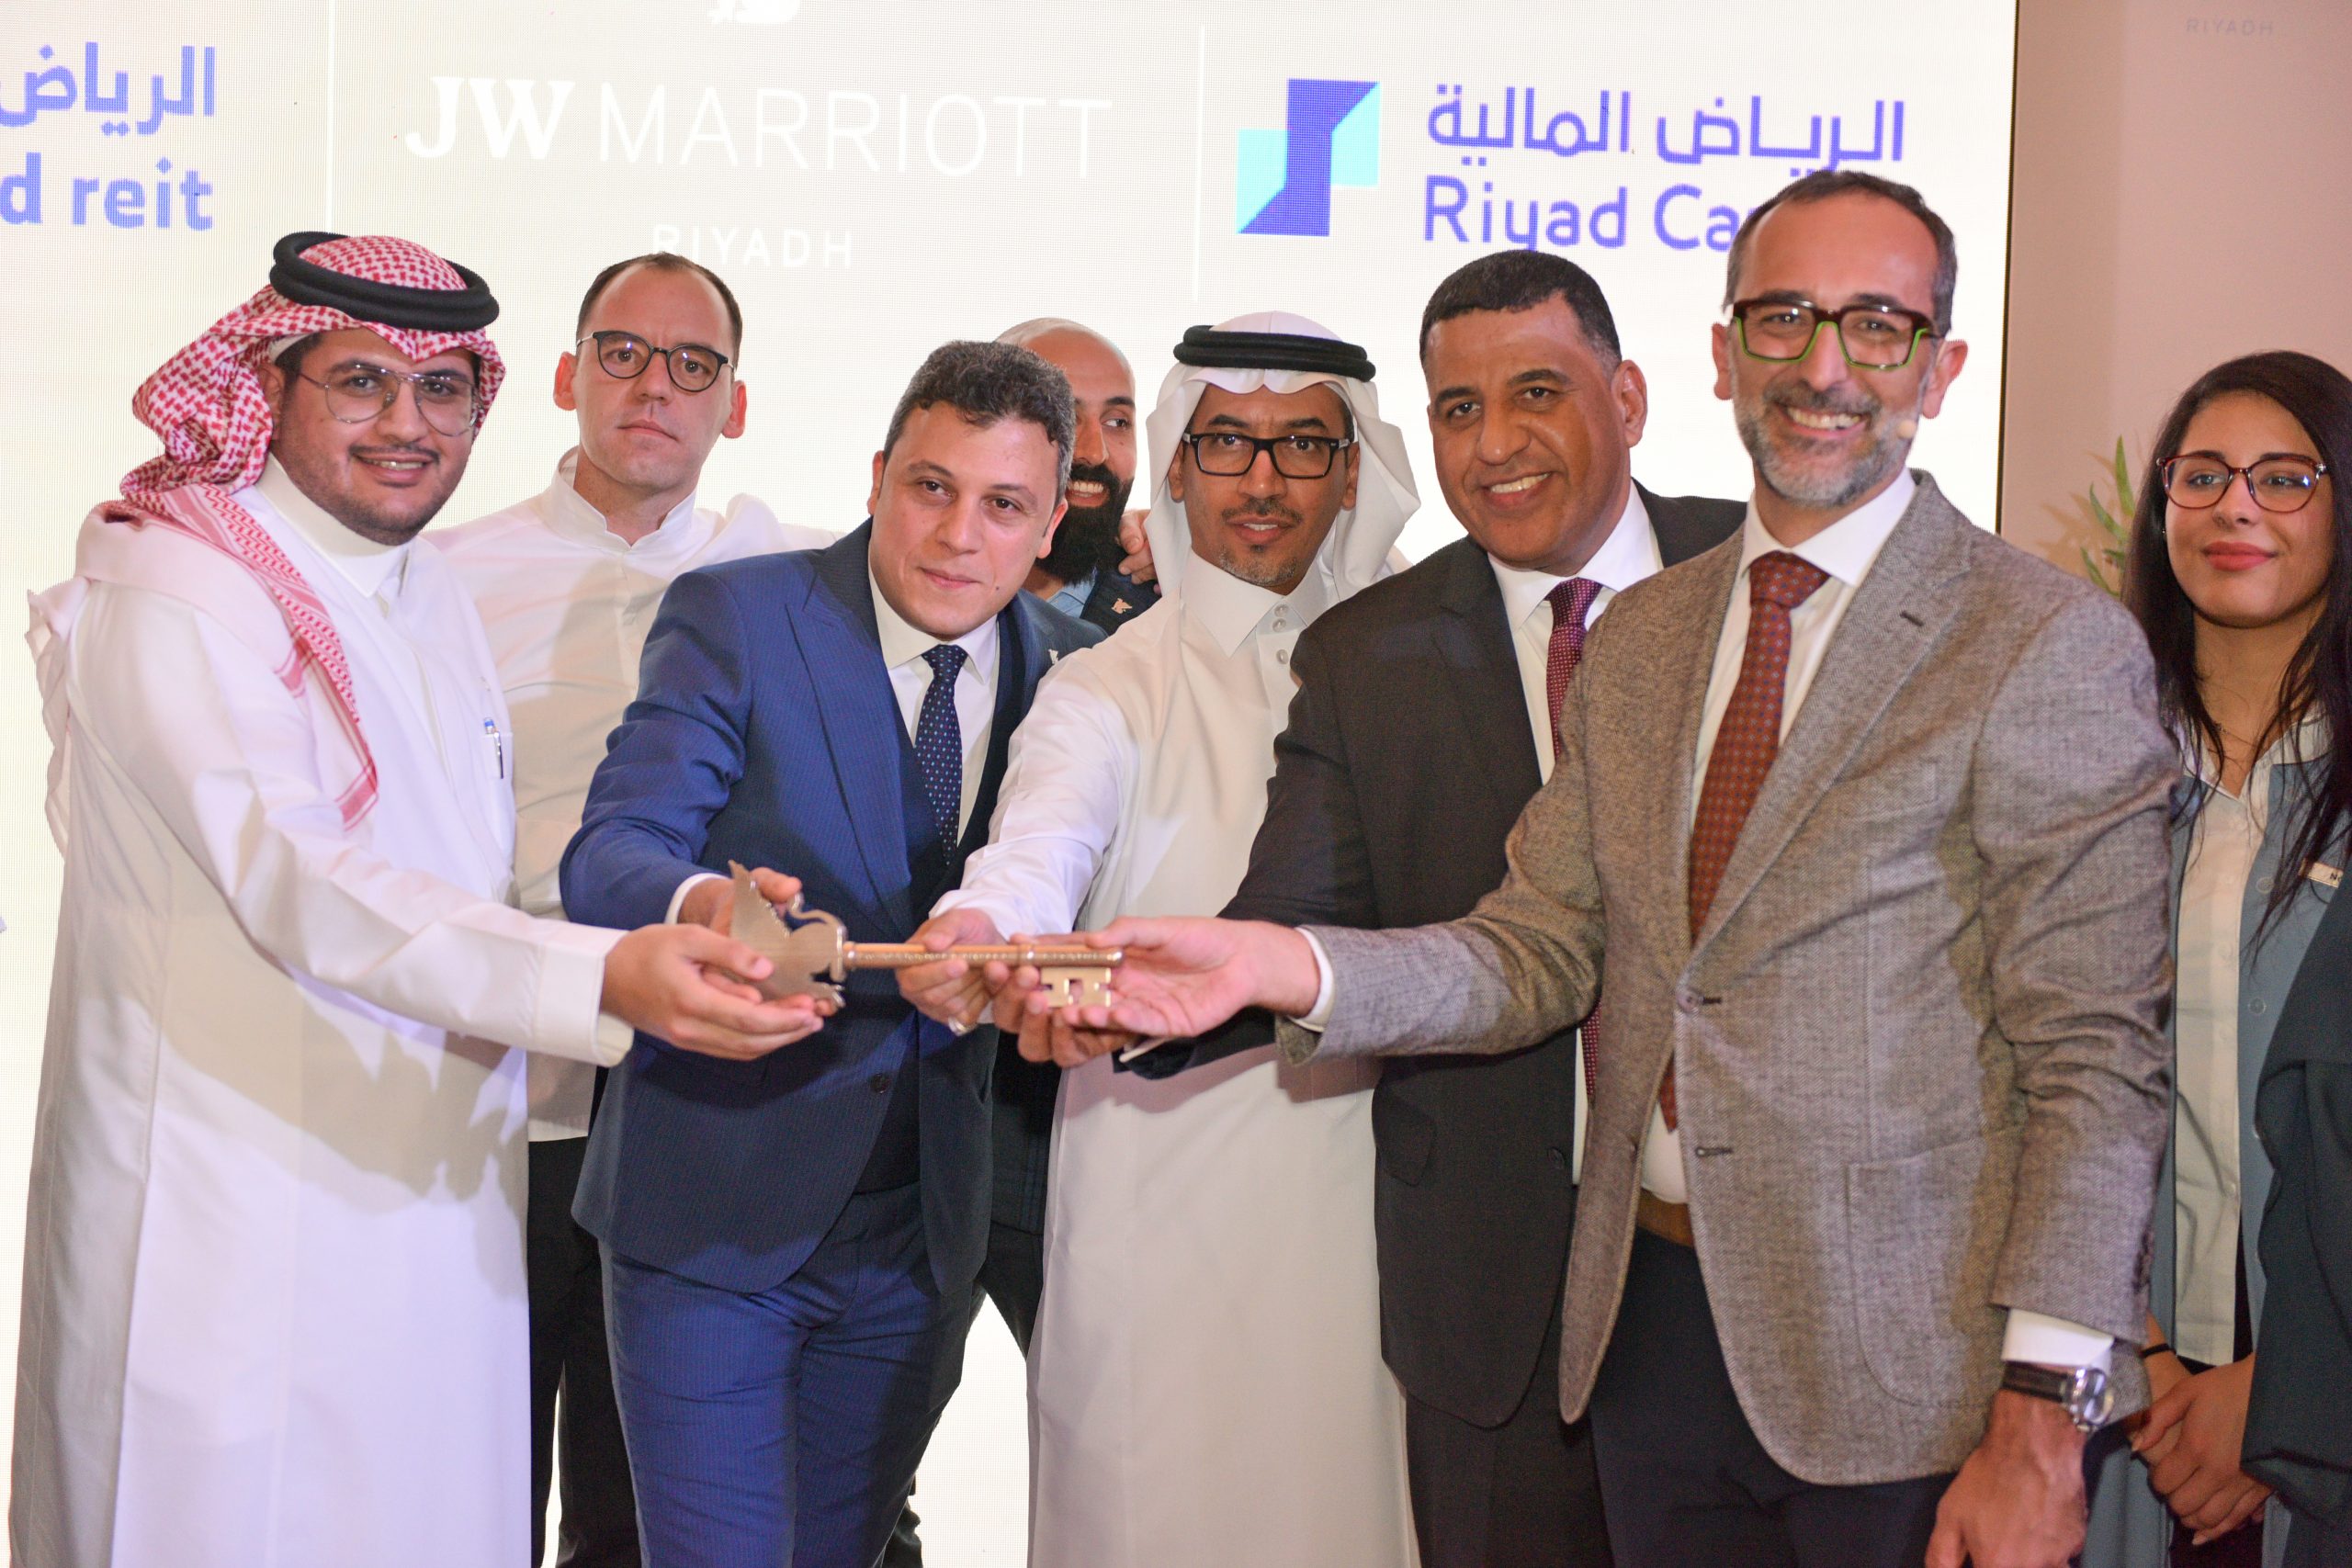 JW Marriott debuts in Saudi Arabia with the opening of JW Marriott